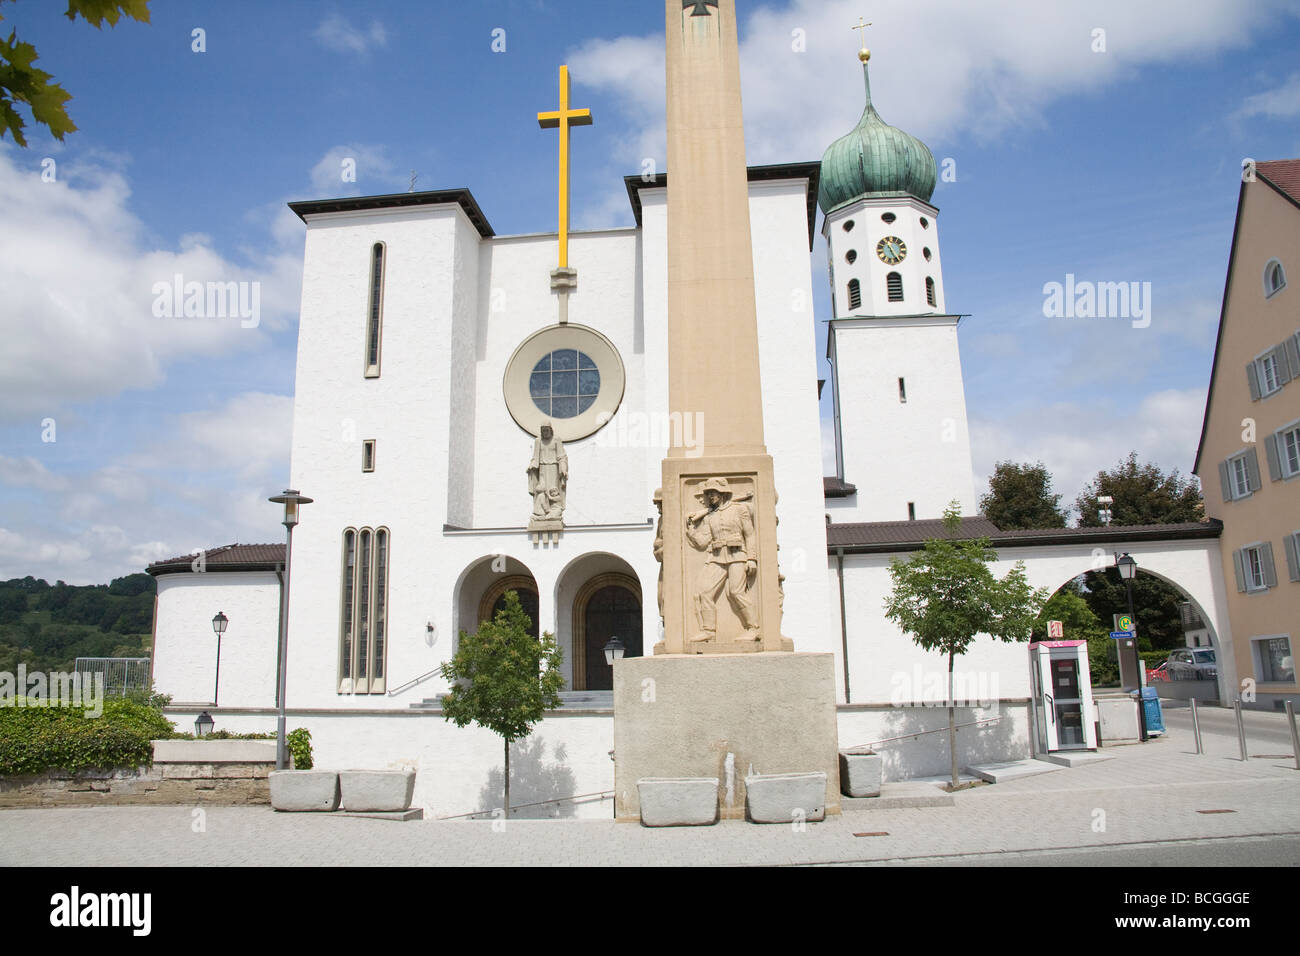 Stockach Baden Wurttenburg Germany EU War memorial in front of an impressive church Stock Photo